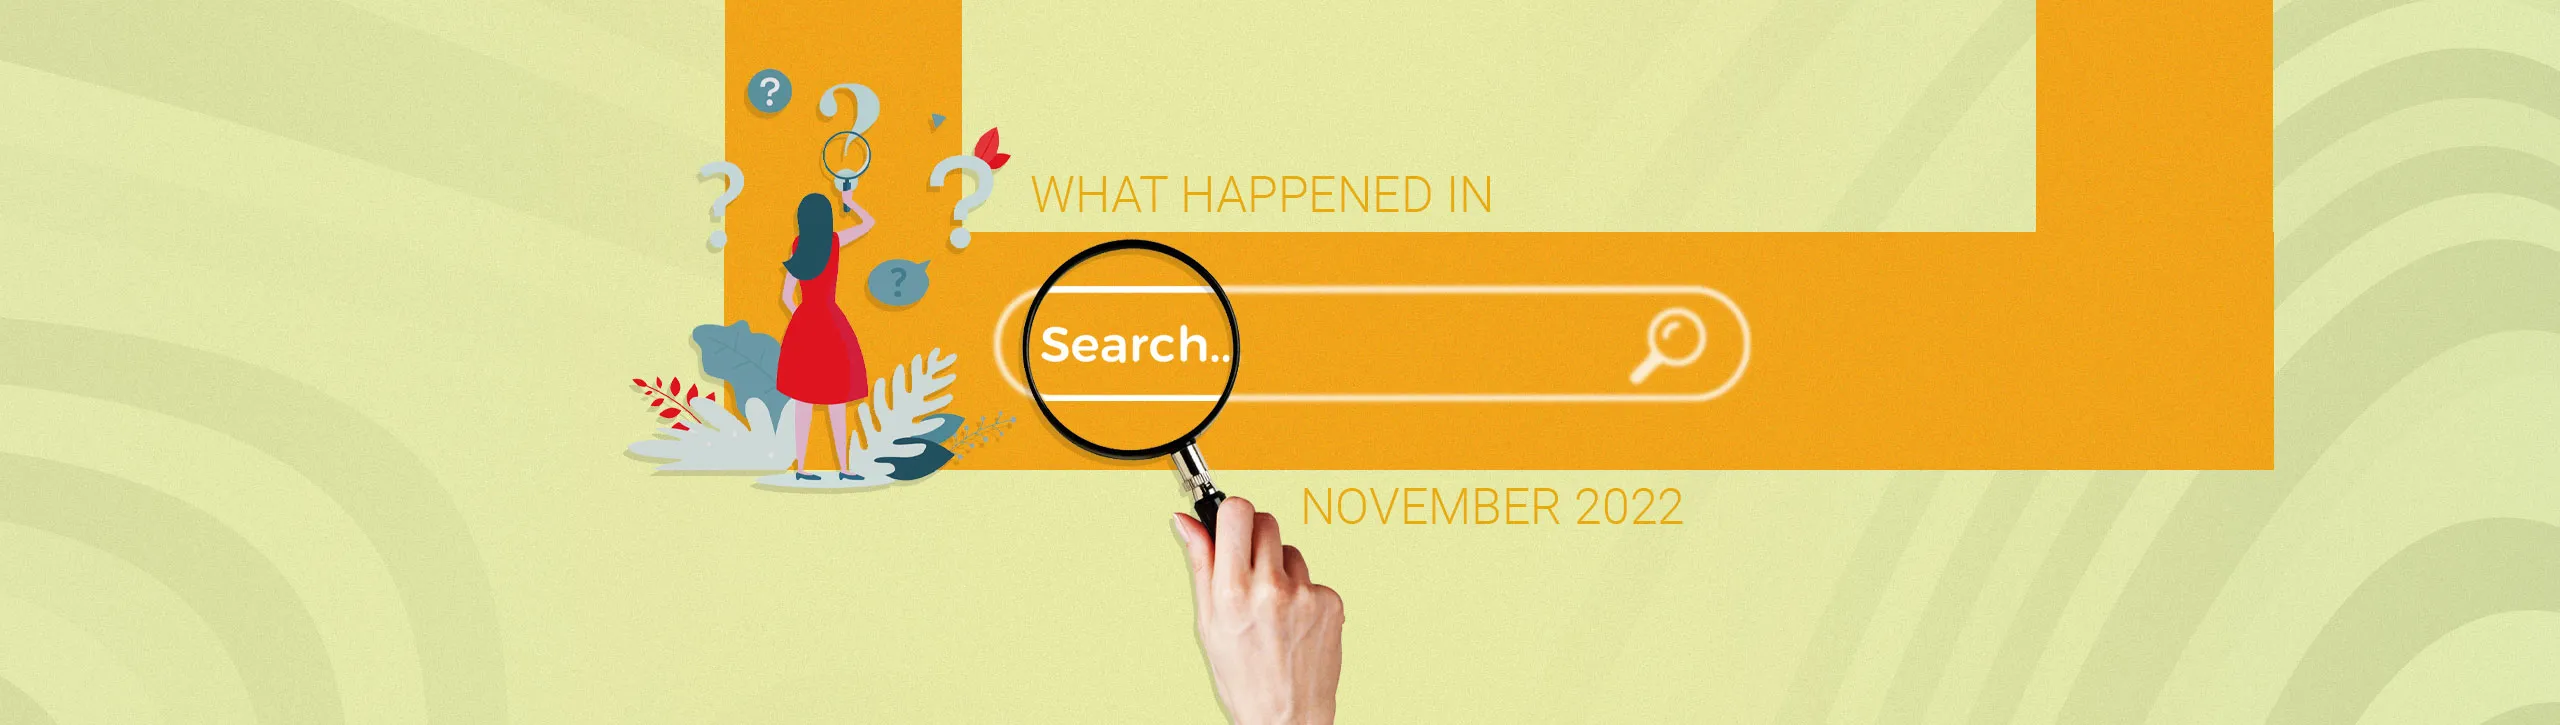 Google Search Updates – December ‘21 Changes